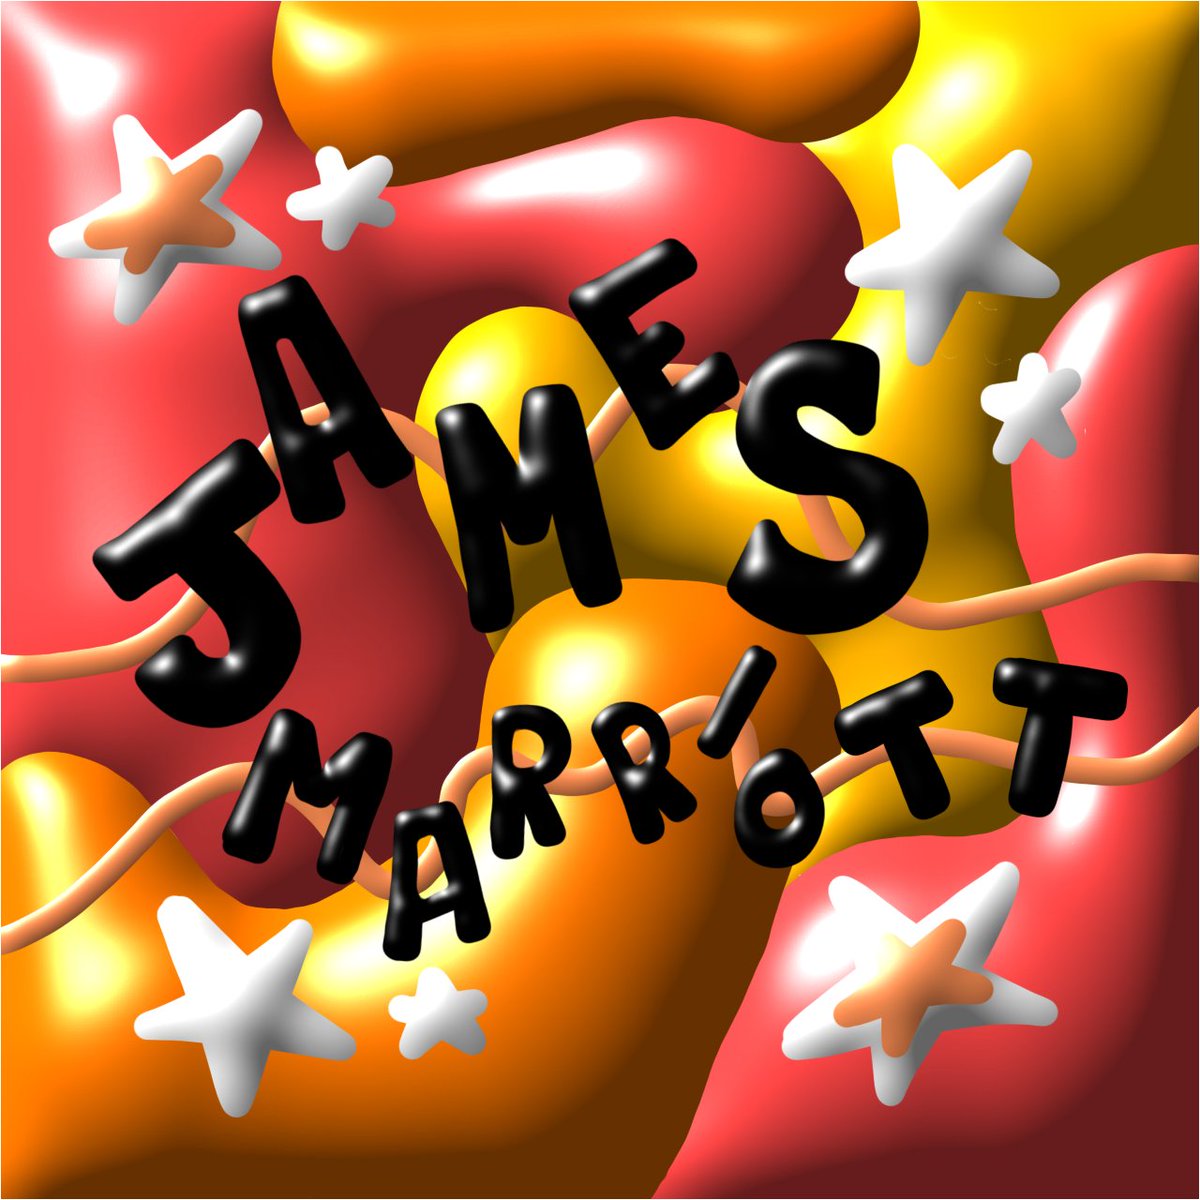 I made a thing ! ˗ˏˋ ★ ˎˊ˗
colours influenced by awty ♡
.
.
.
#jamesmarriott #jamesmarriottfanart #jimbotwt #mazzatwt #jimbomazza #awty #arewethereyet